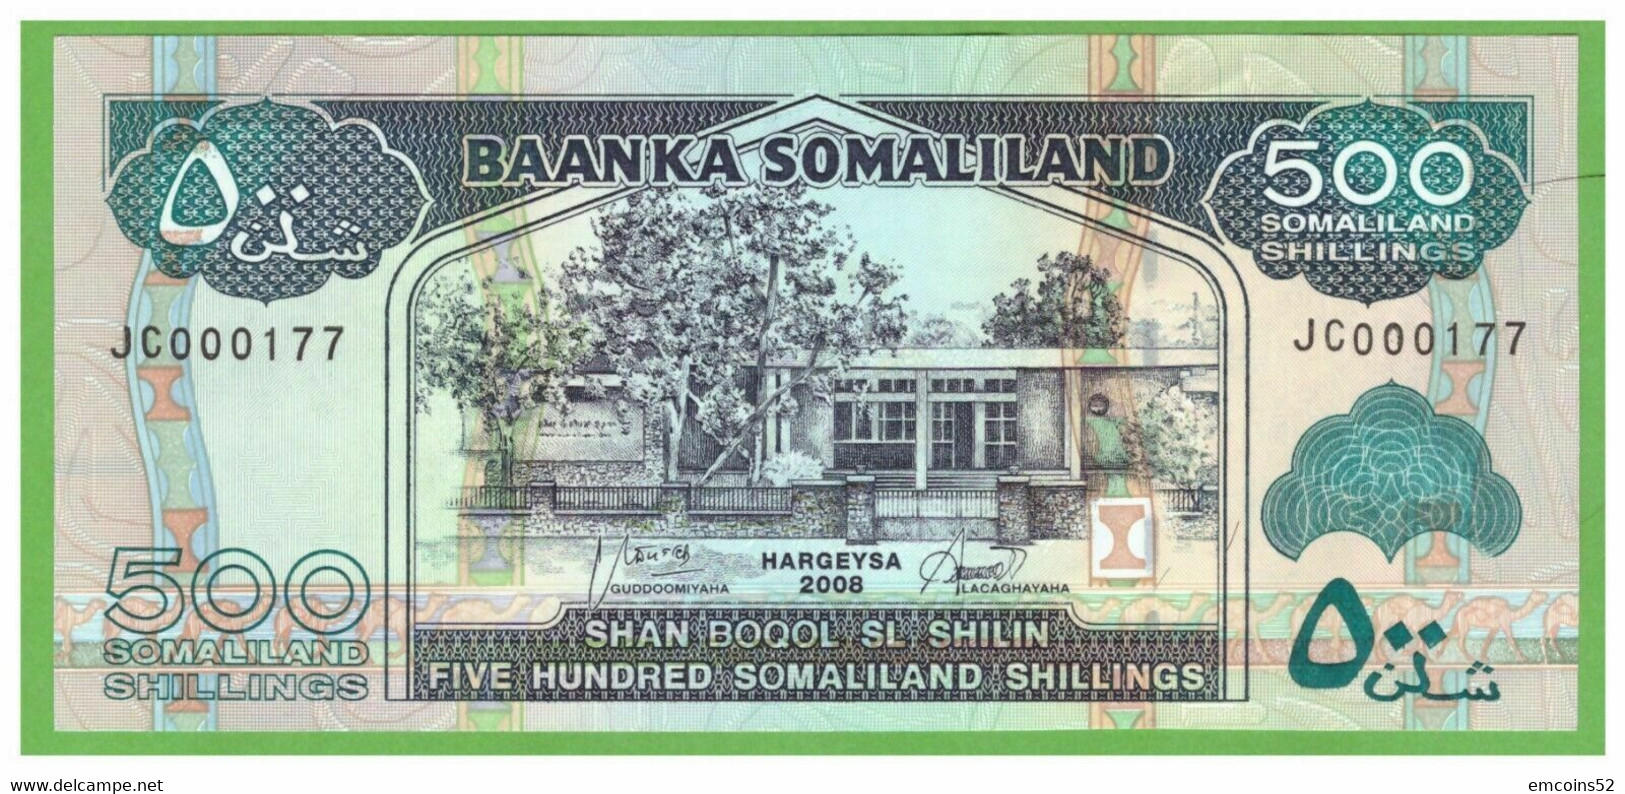 SOMALILAND 500 SHILLINGS 2008  P-6g  UNC  NUMBER 000177 - Somalia